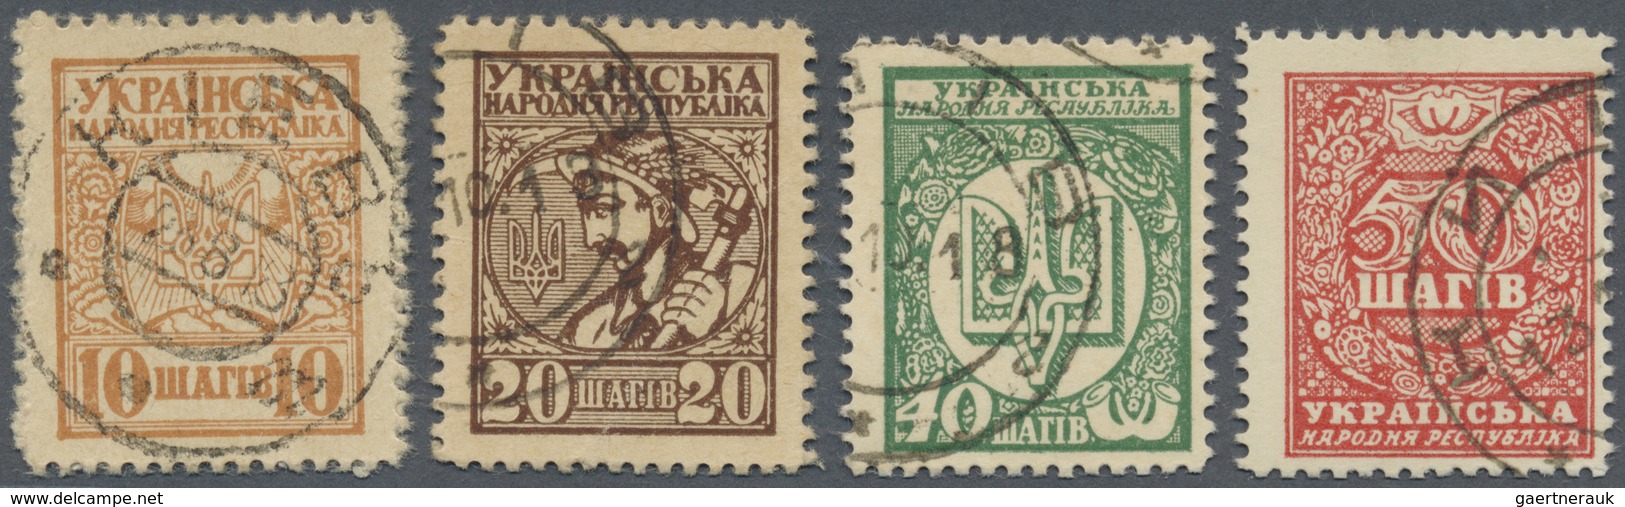 Ukraina / Ukraine: Set With 10, 20, 40 And 50 Shahiv ND(1918) Stamp Money, P.7, 8, 10a, 11a, All Pos - Ukraine